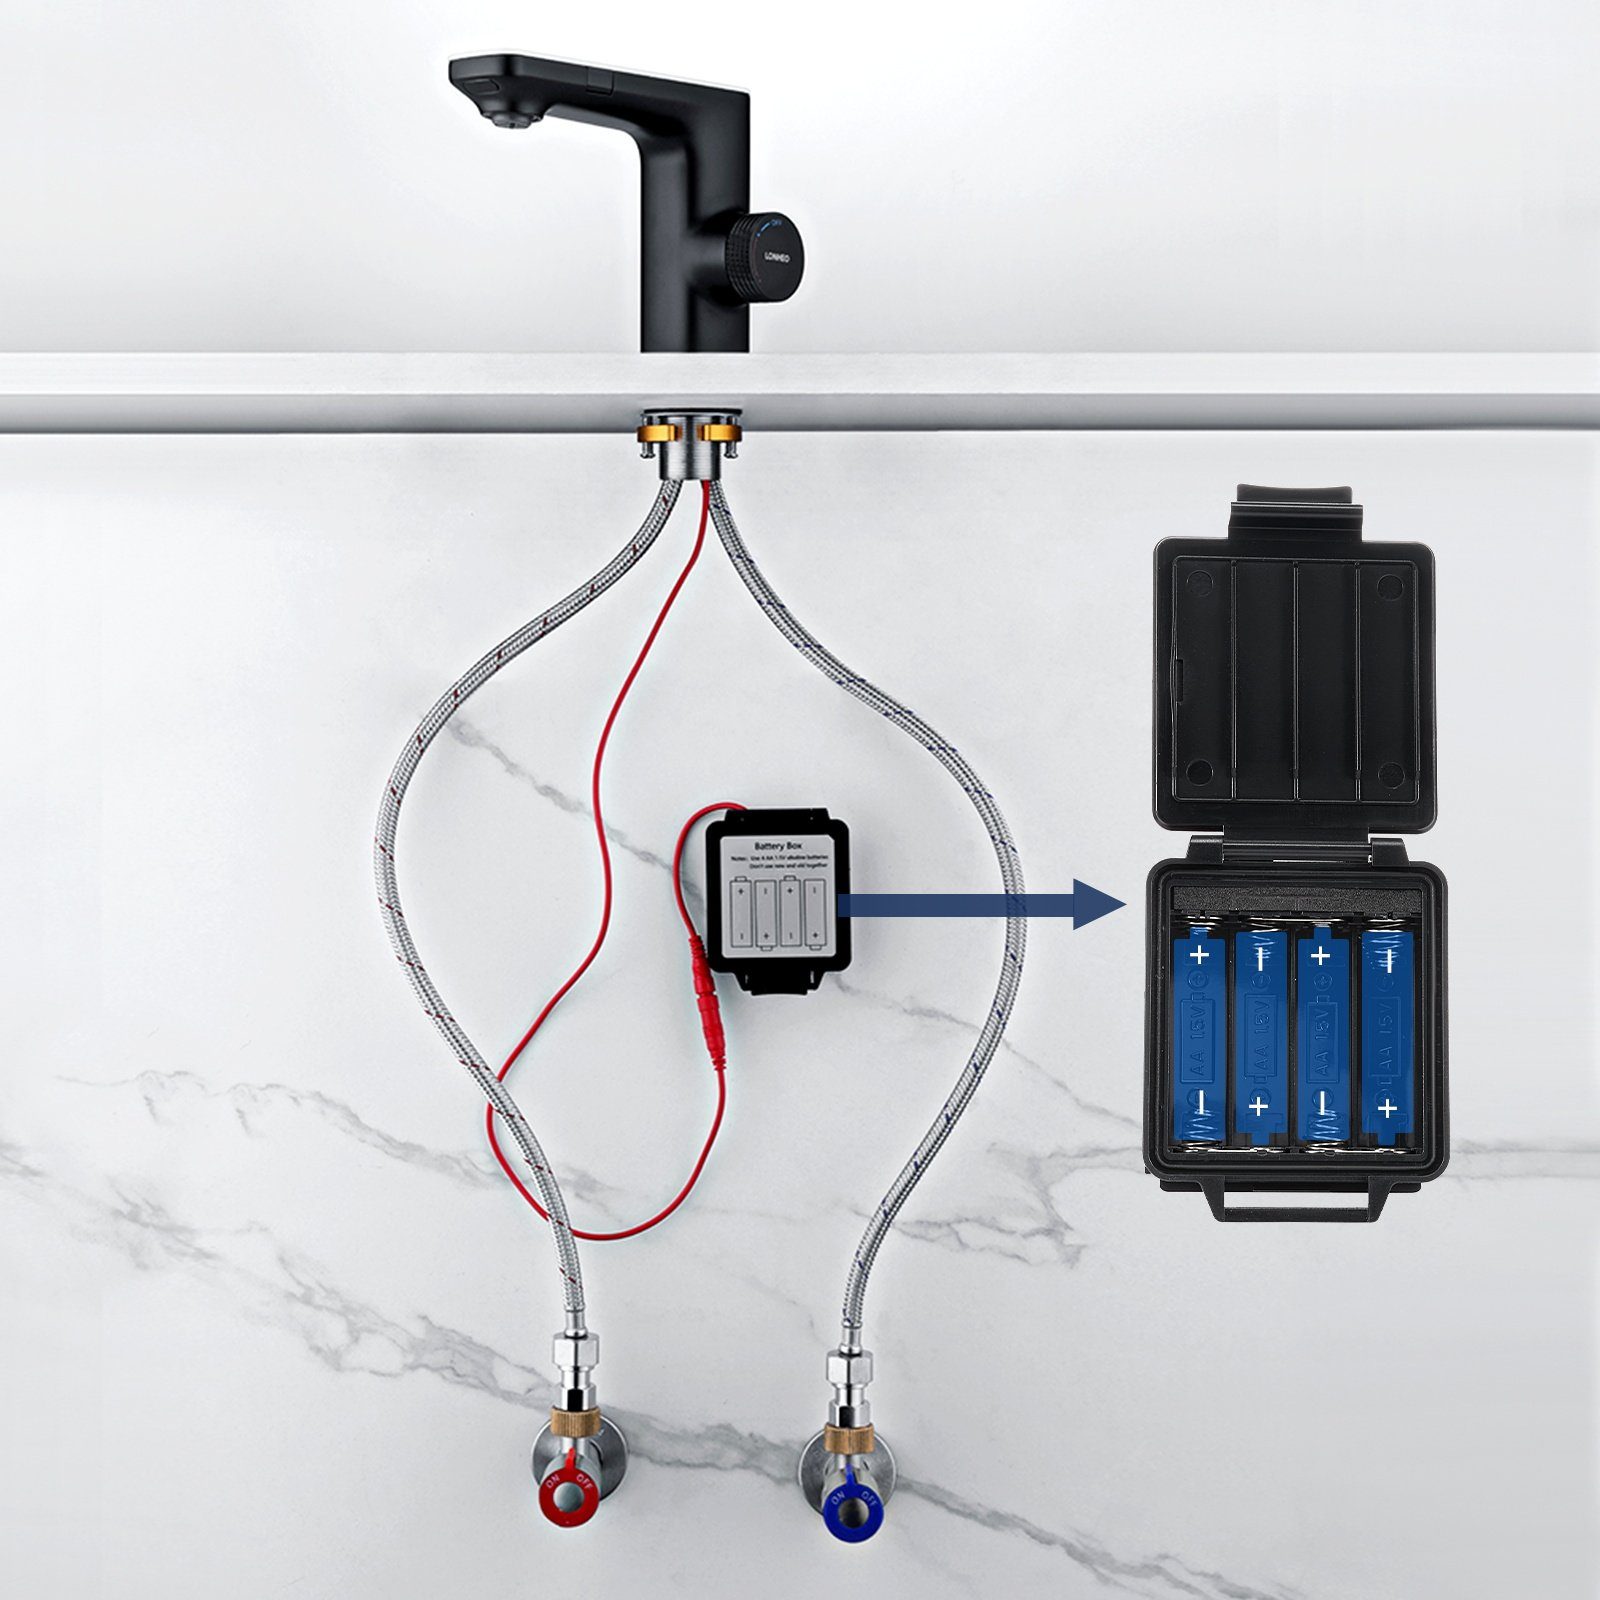 Infrarot Automatische Wasserhahn Waschtischarmatur Schwarz Bad Sensor Waschtischarmatur Lonheo Auralum